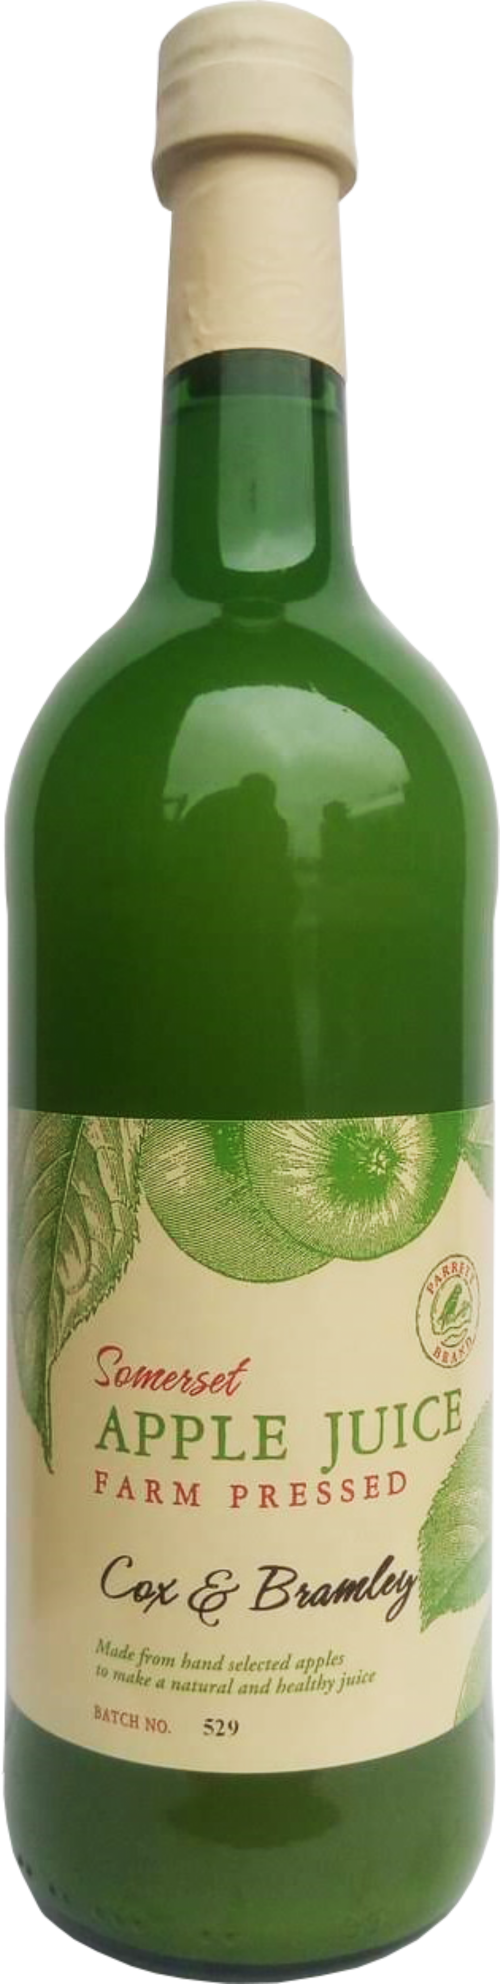 PARRETT BRAND Somerset Apple Juice - Cox & Bramley 75cl